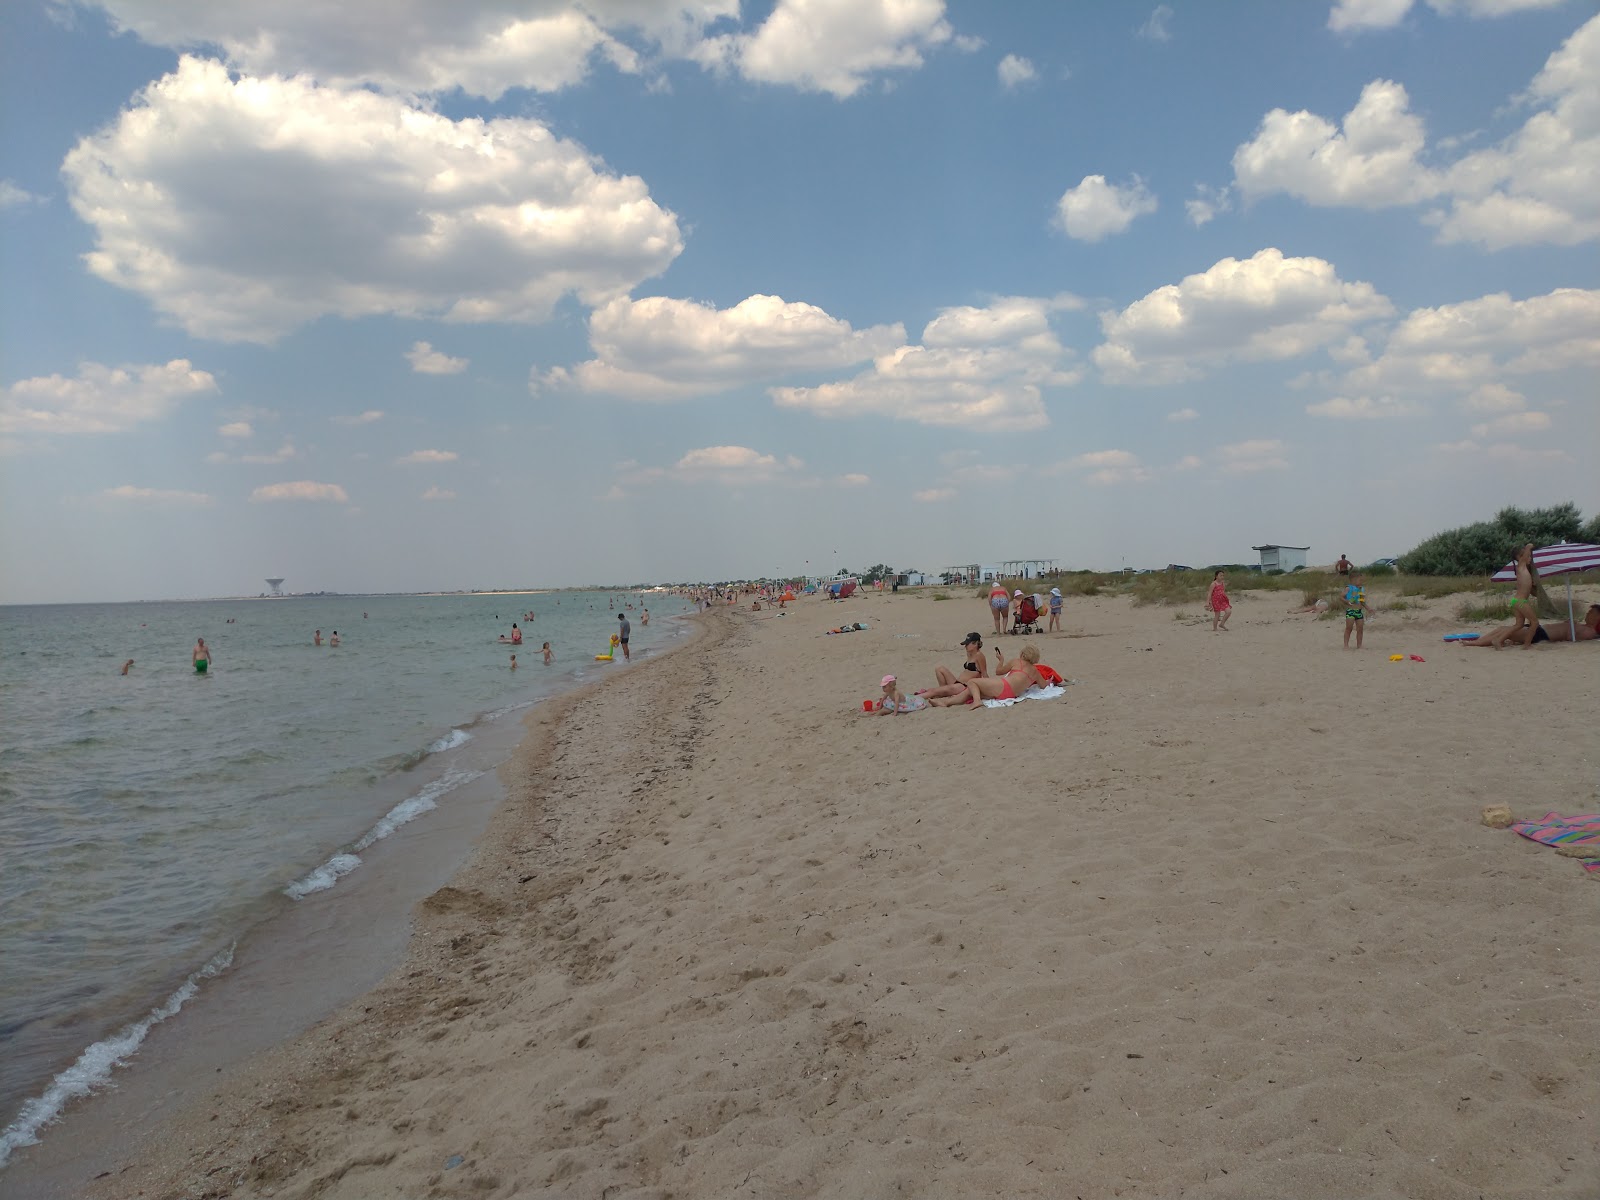 Foto de Zaozernoe beach III - lugar popular entre os apreciadores de relaxamento